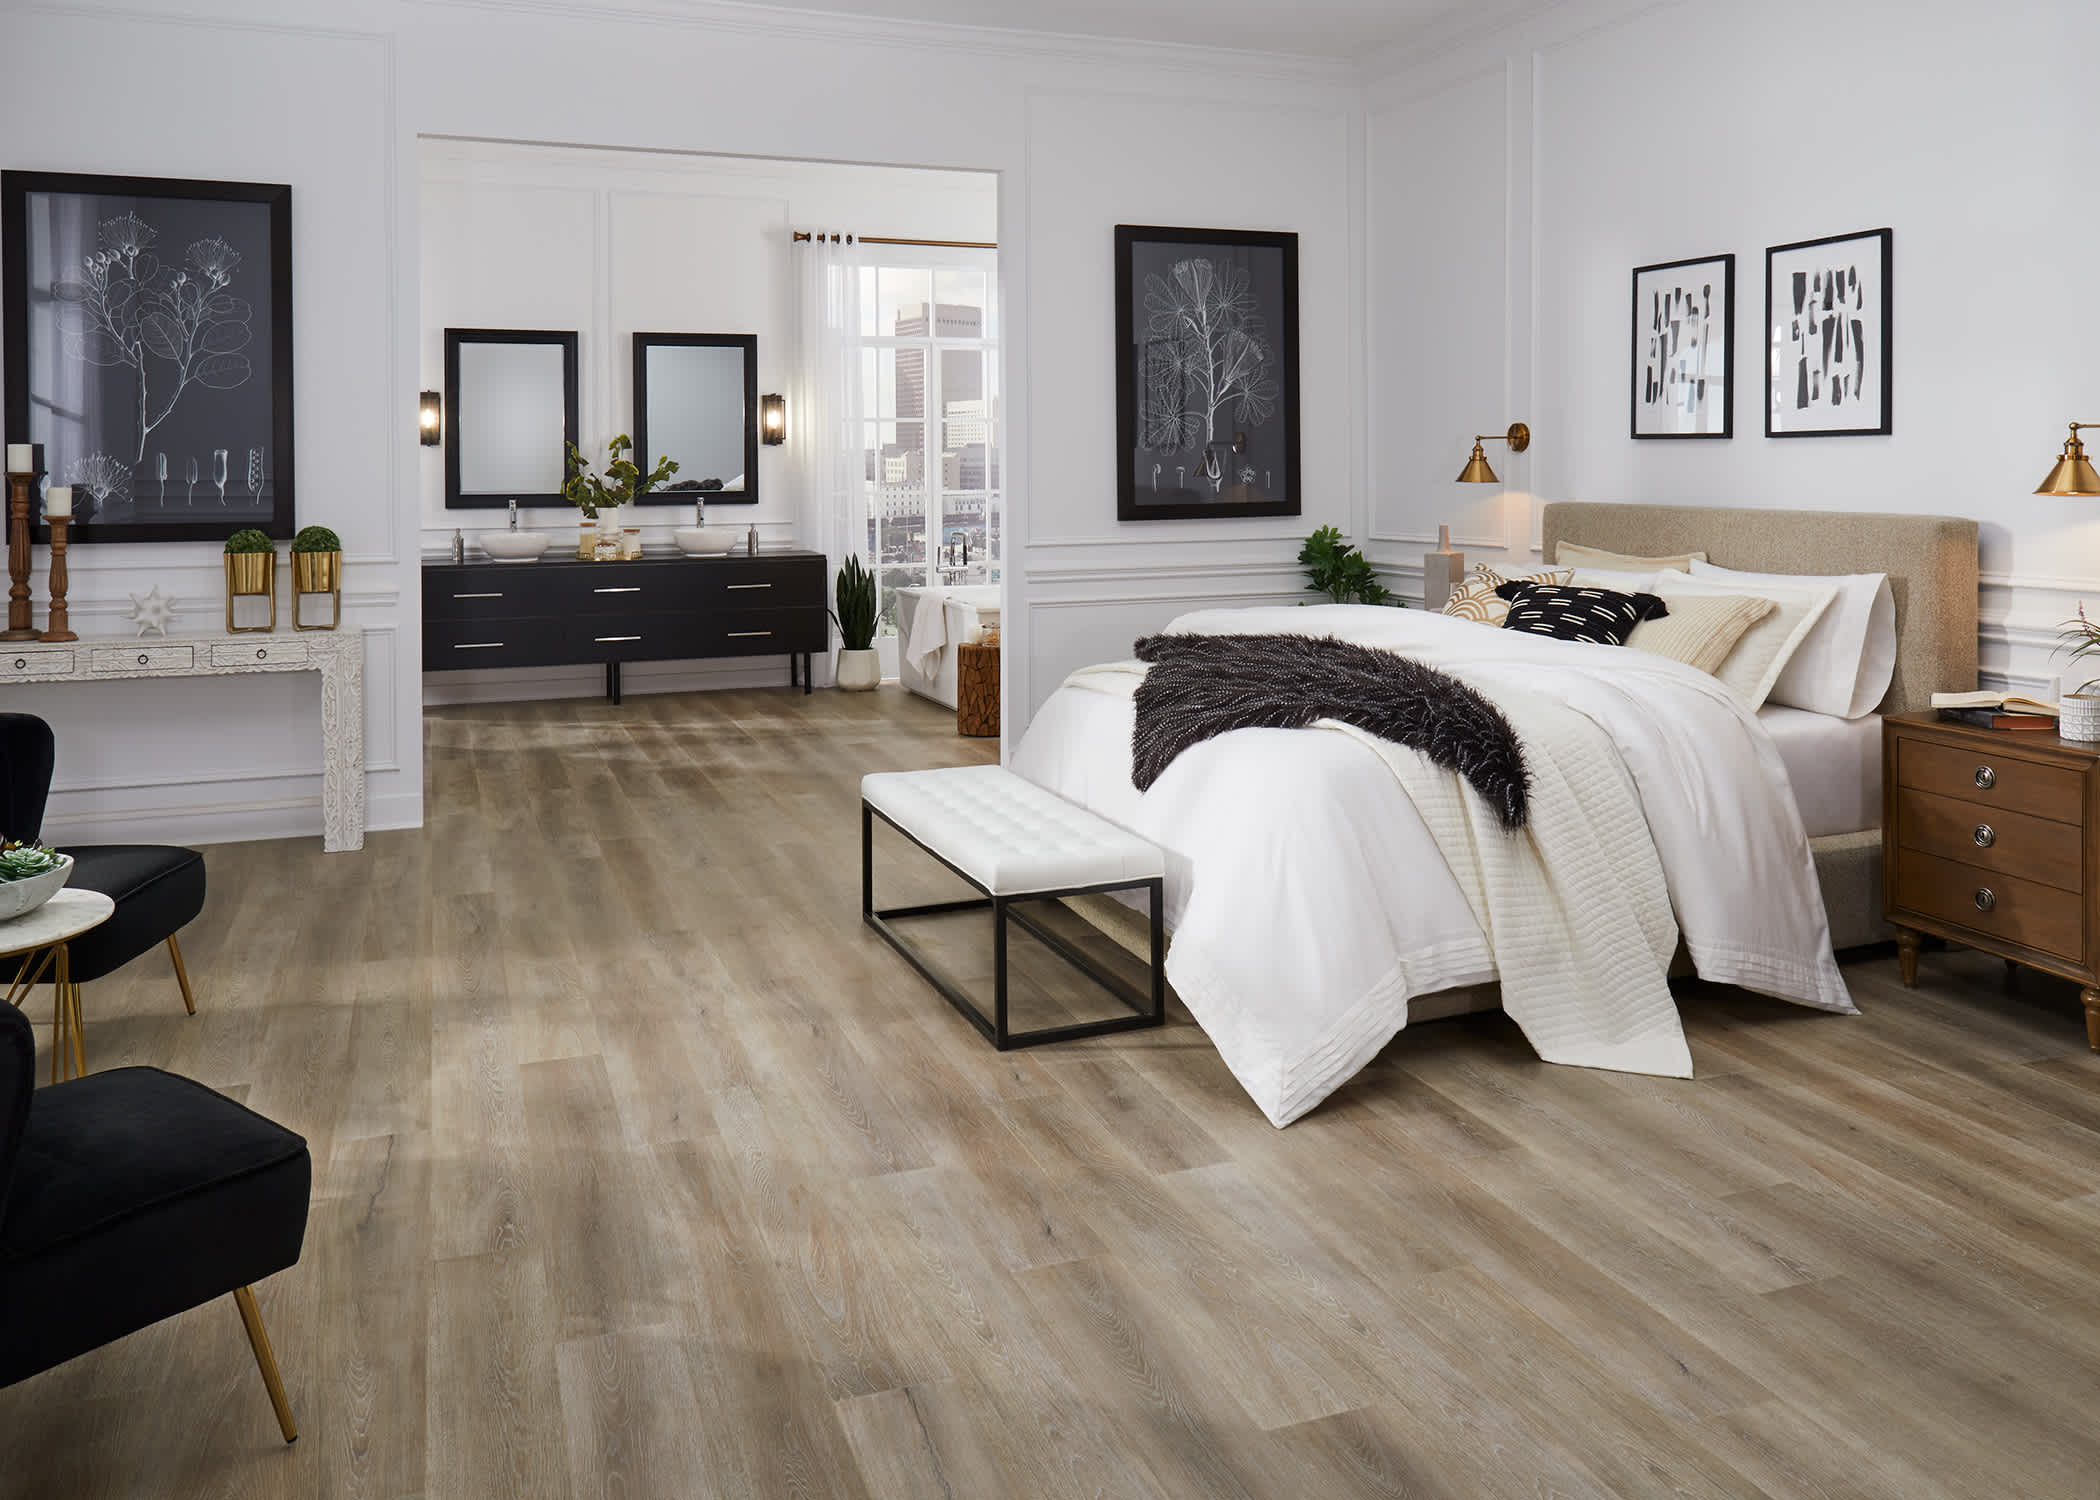 bedroom with Duravana Hybrid Resilient Floors Installed